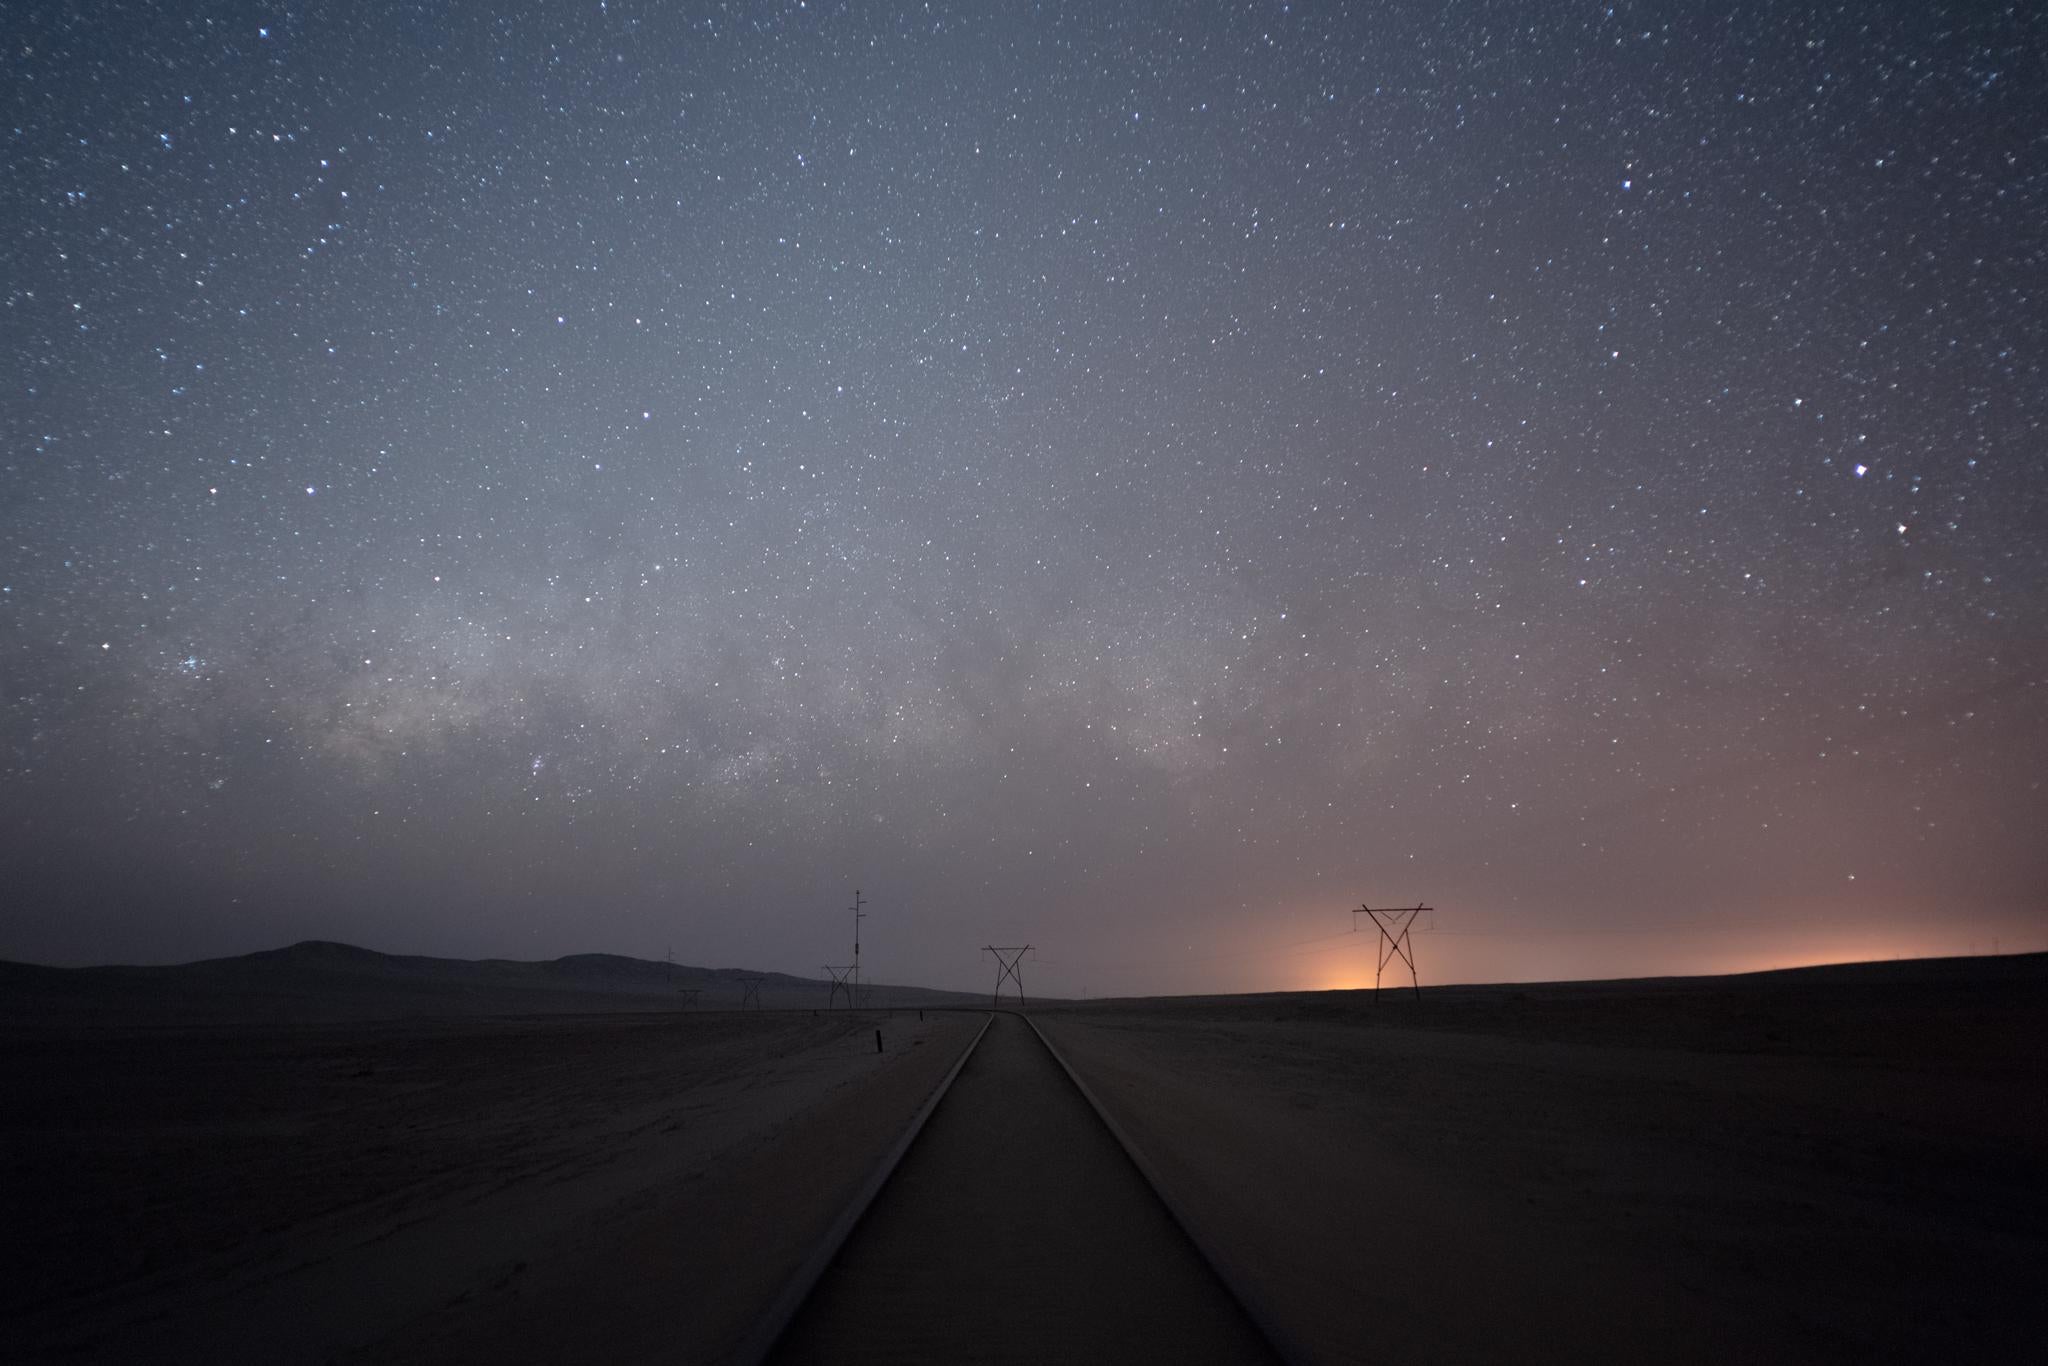  Night blue photo of Milky Way in Namibia. Photograph by Anna Dobrovolskaya-Mint